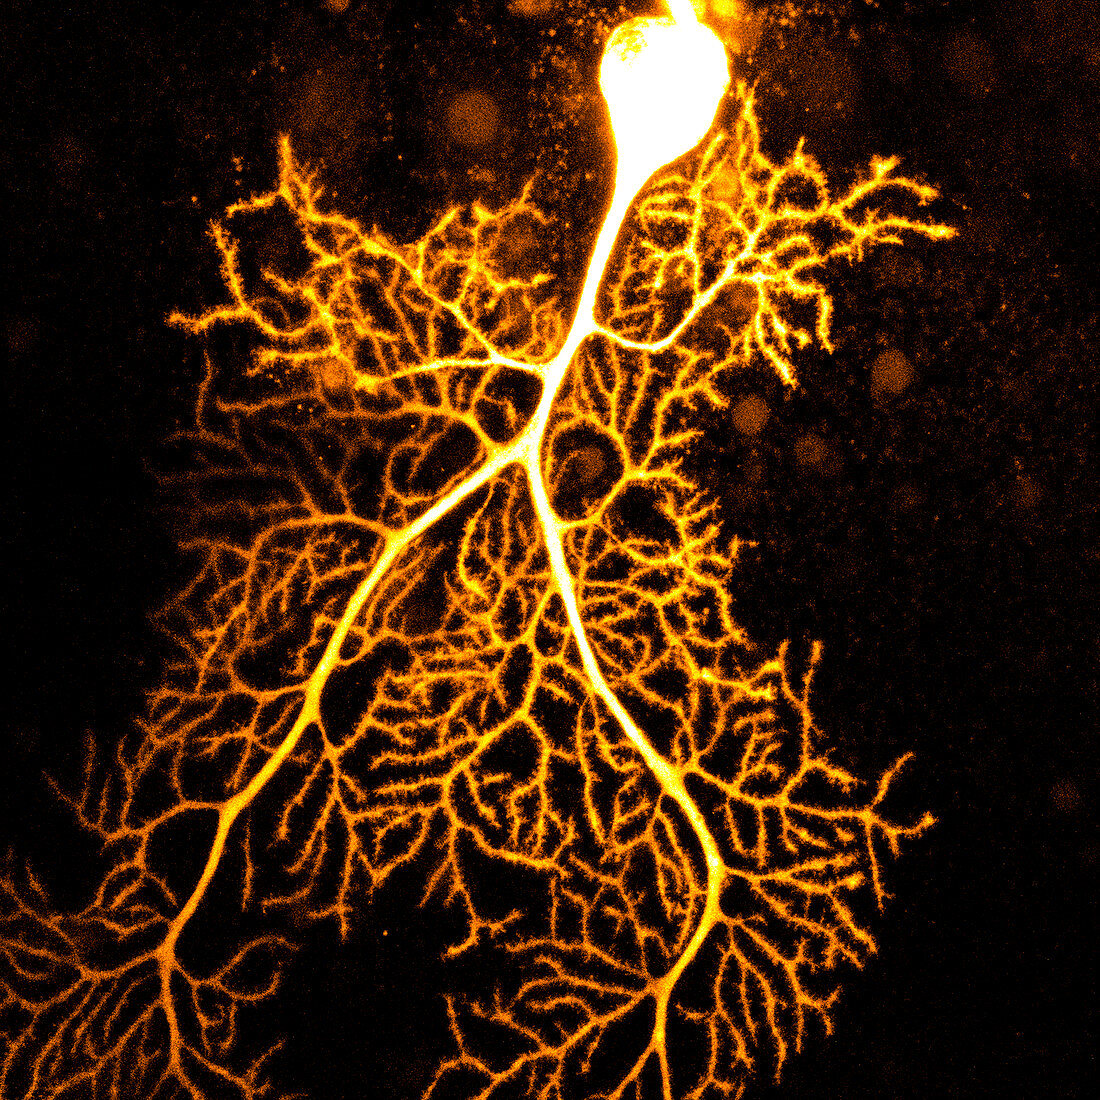 Purkinje nerve cell, confocal micrograph